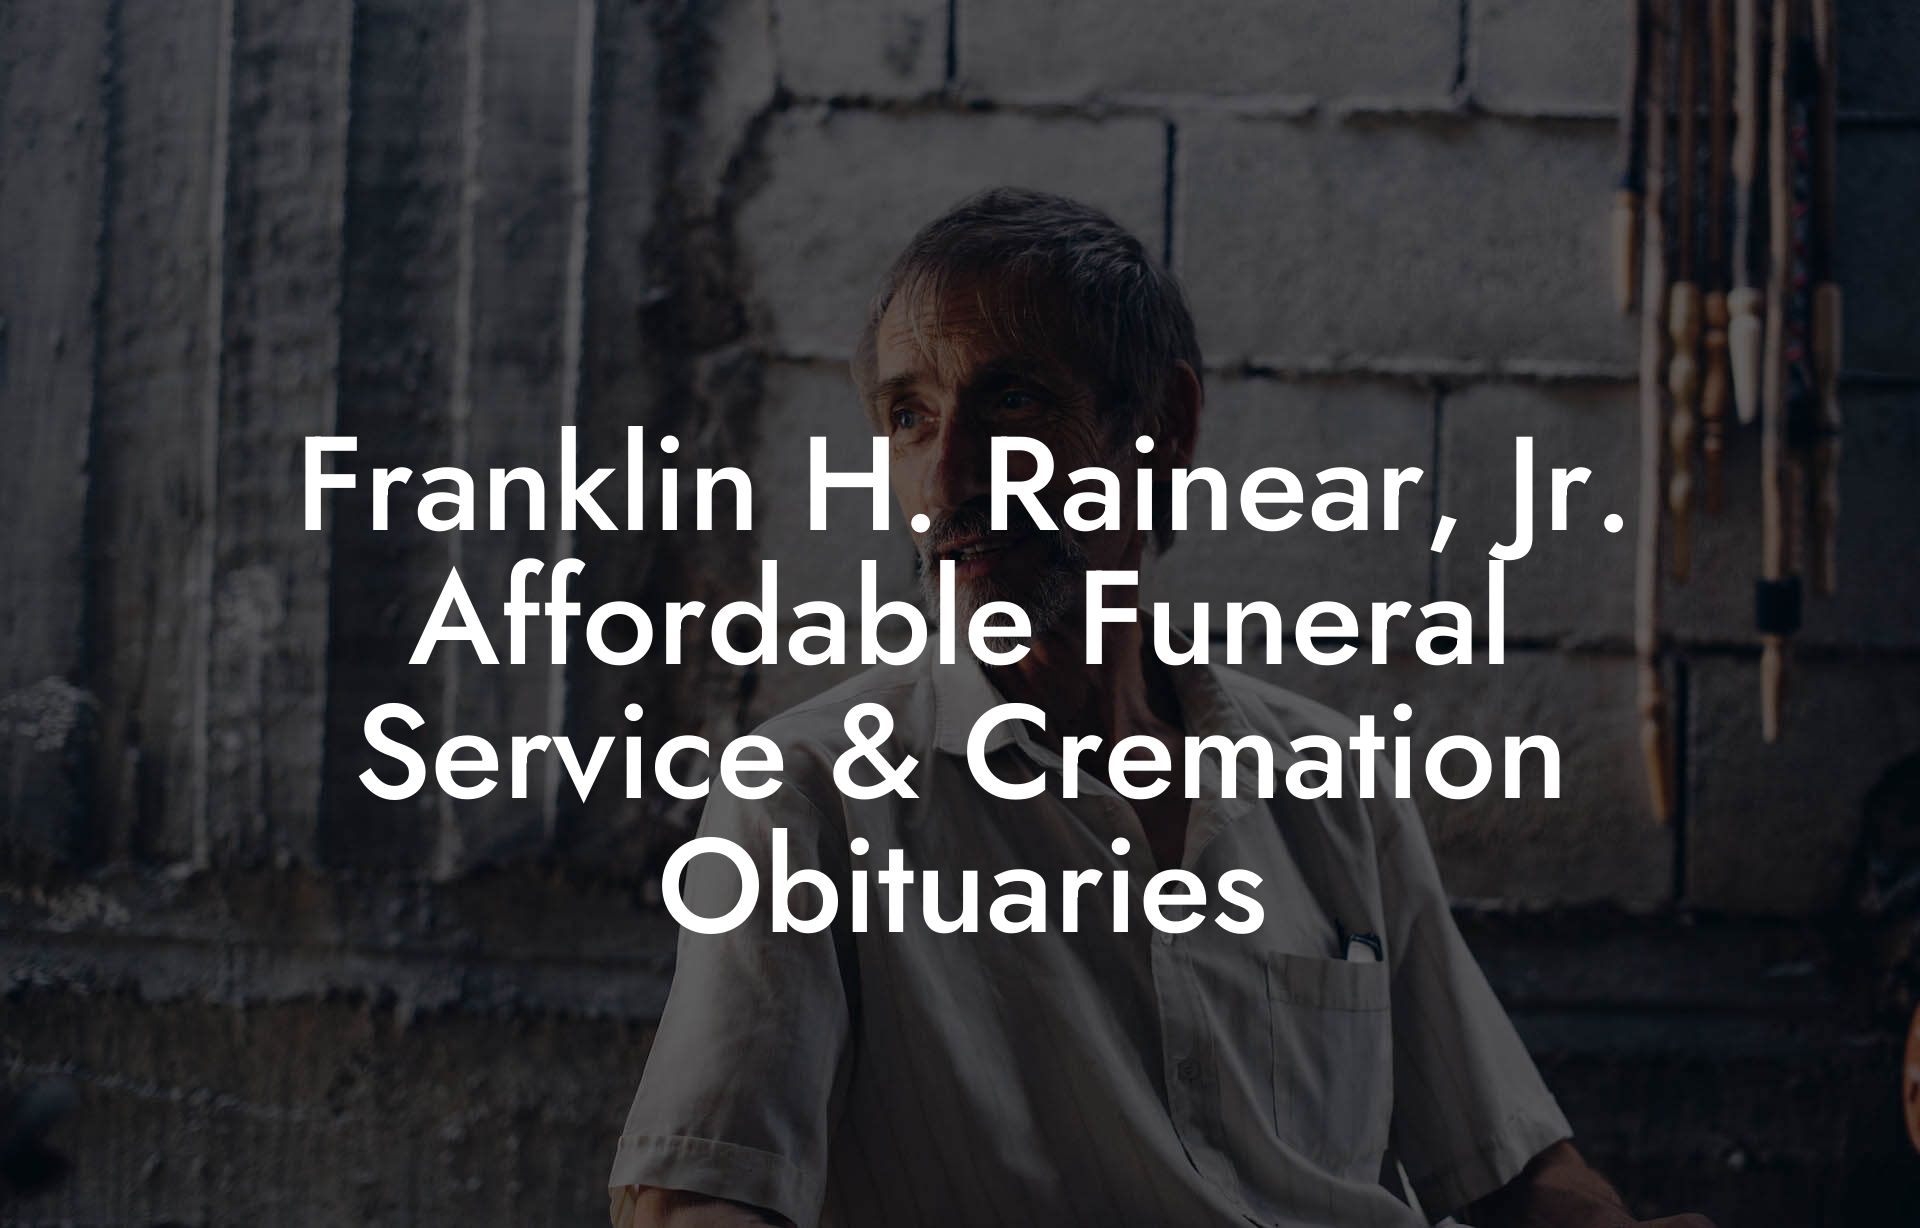 Franklin H. Rainear, Jr., Affordable Funeral Service & Cremation Obituaries